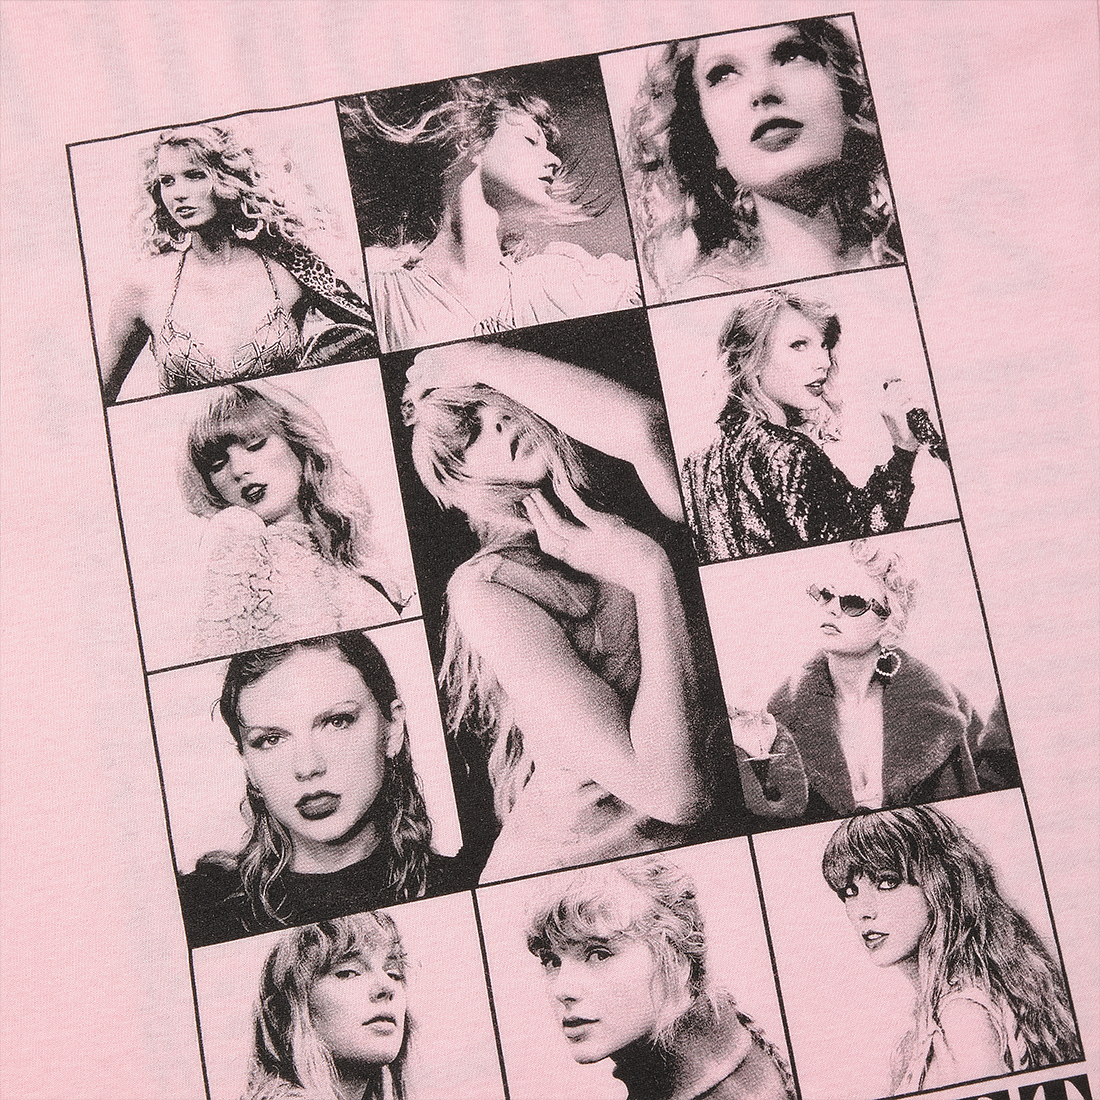 Taylor Swift The Eras Tour Pink T-Shirt